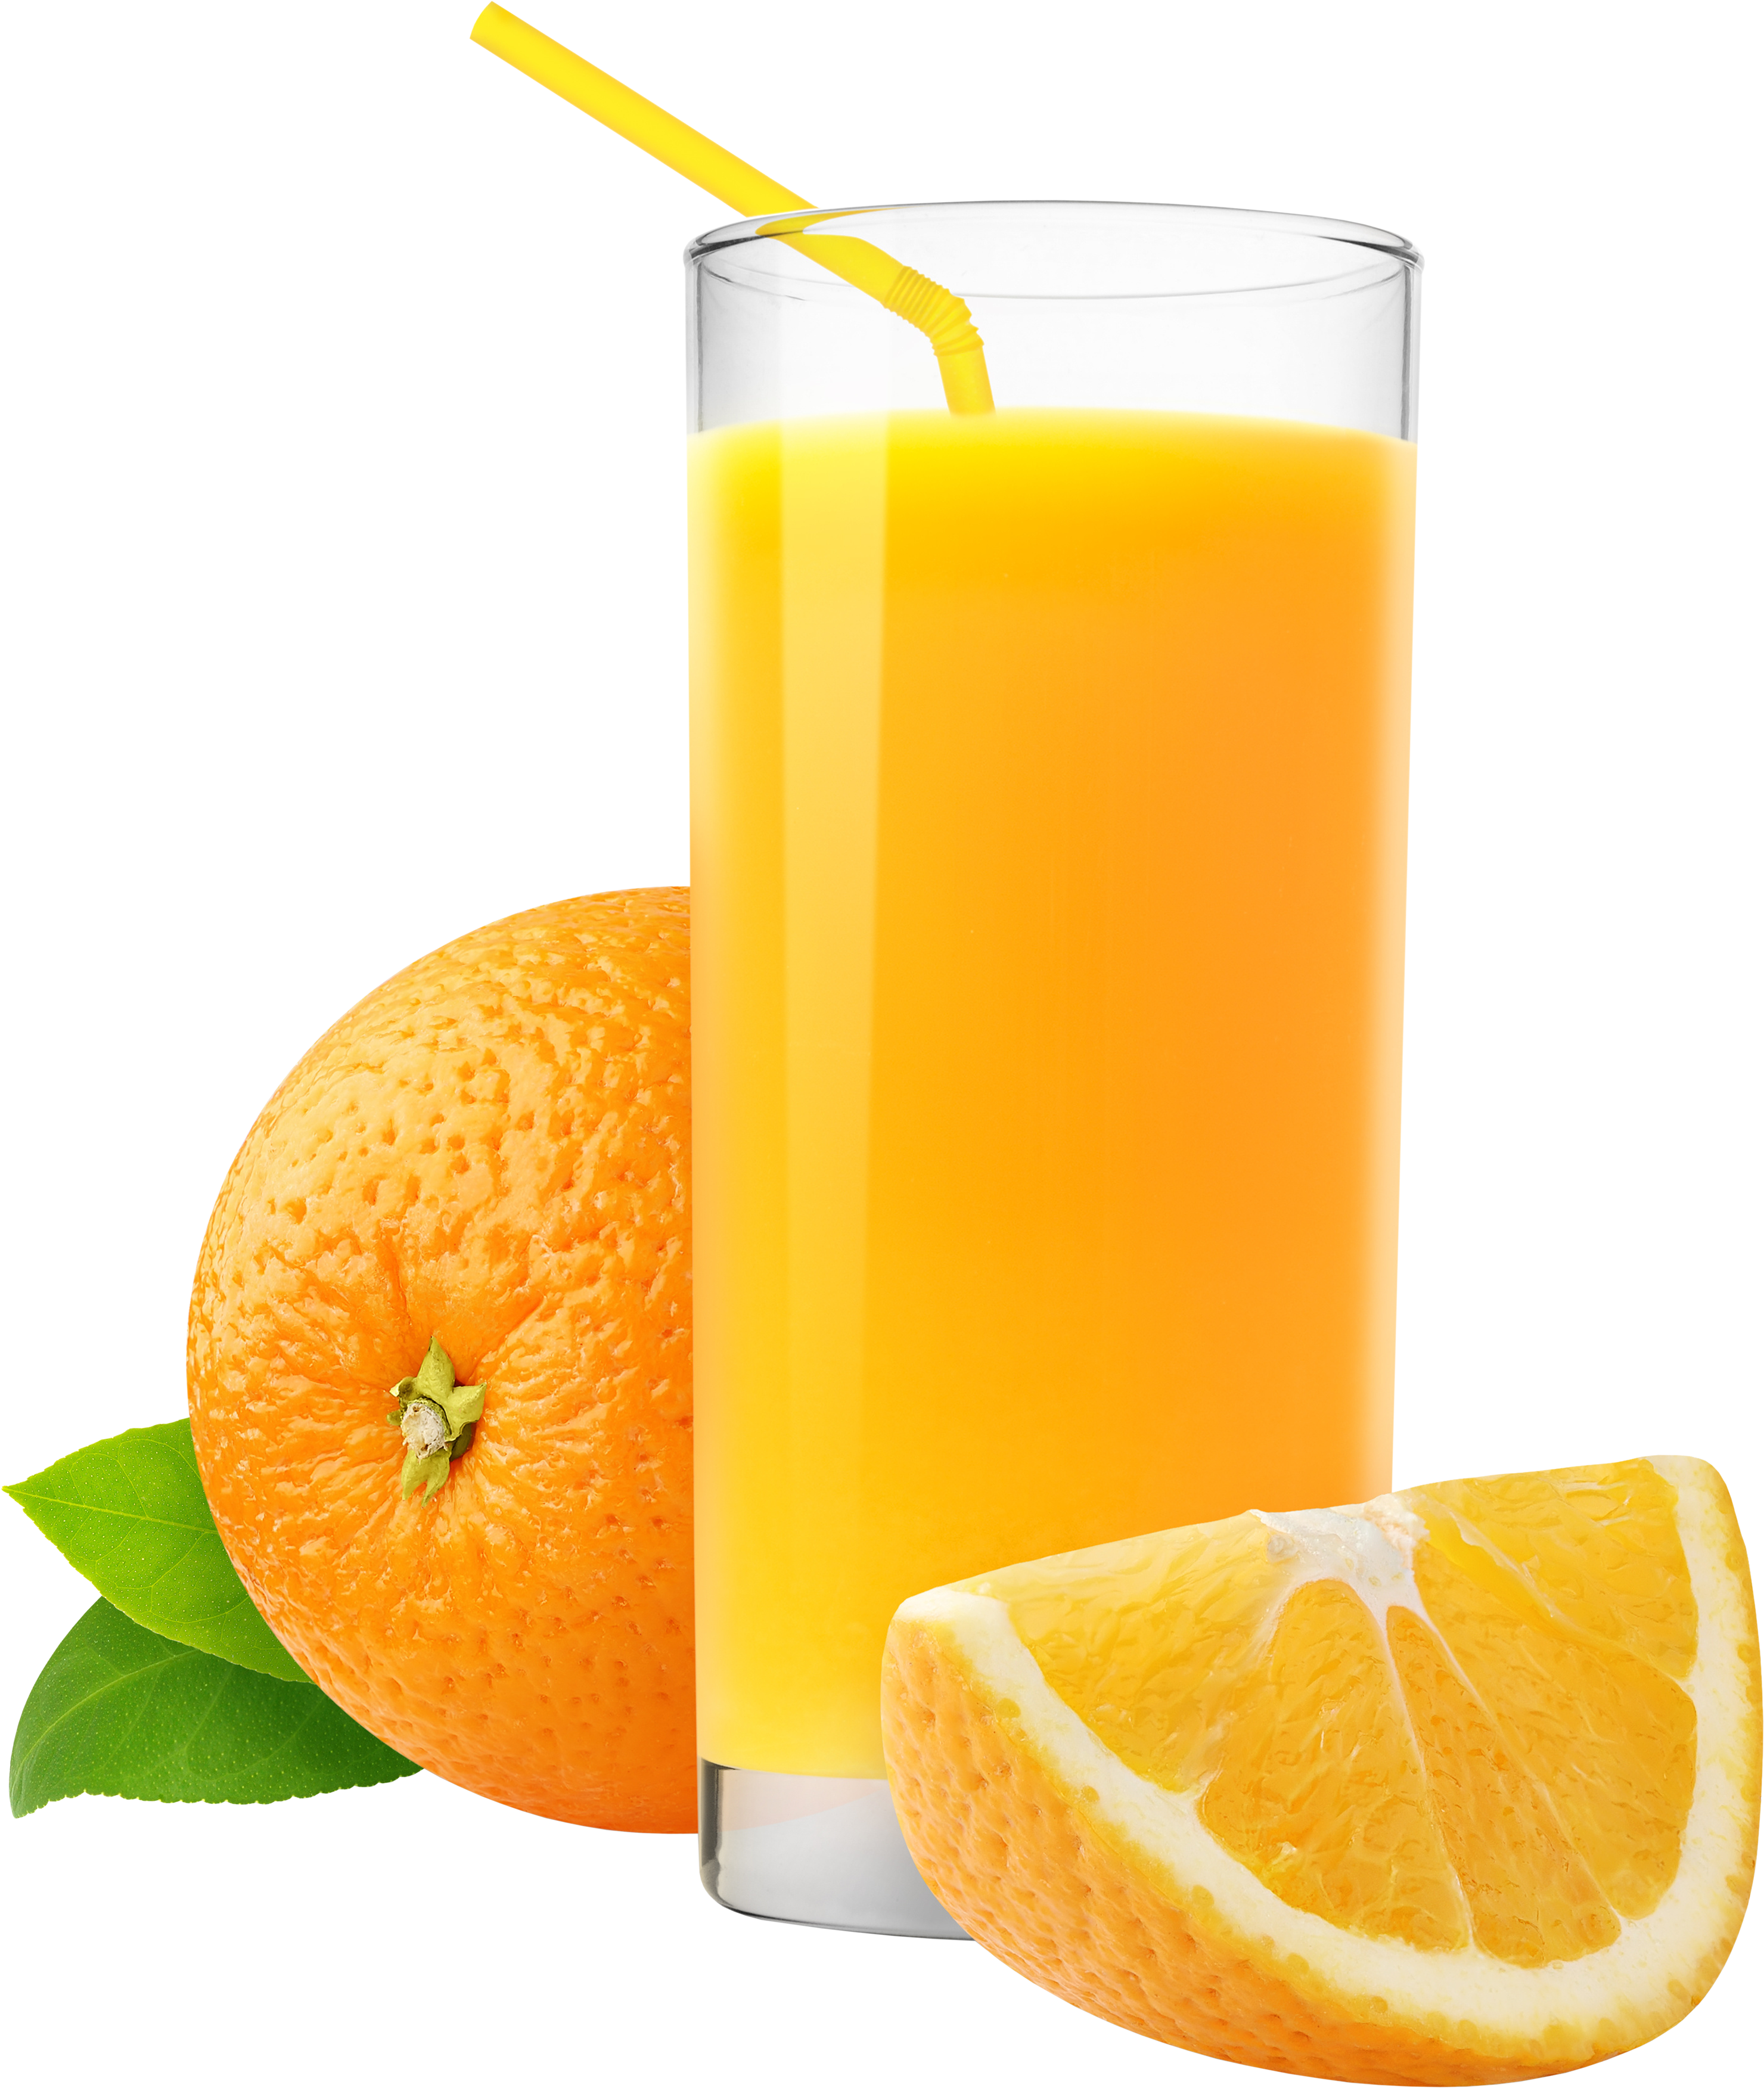 Clipart Orange Juice With A H